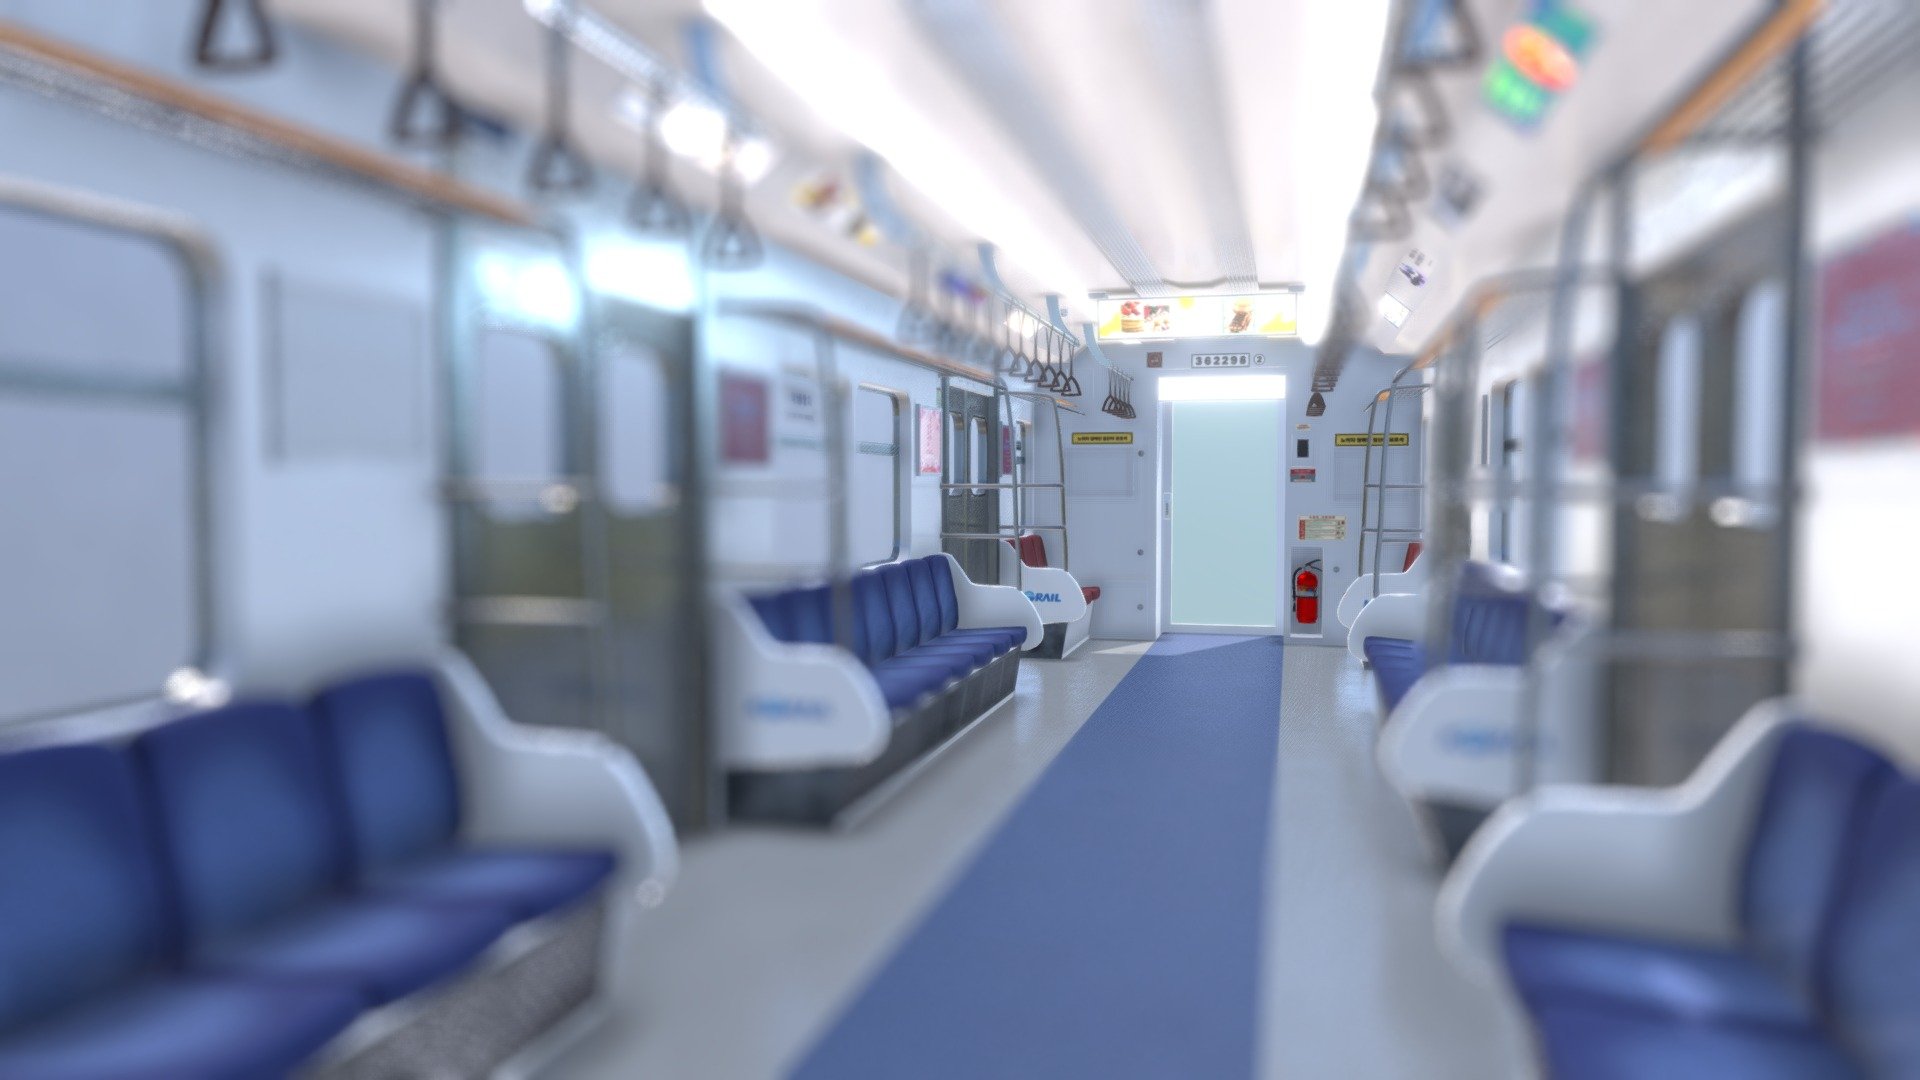 Korea_Subway(Seoul_Line1) - 3D model by jamy9874 [ab3df8a] - Sketchfab